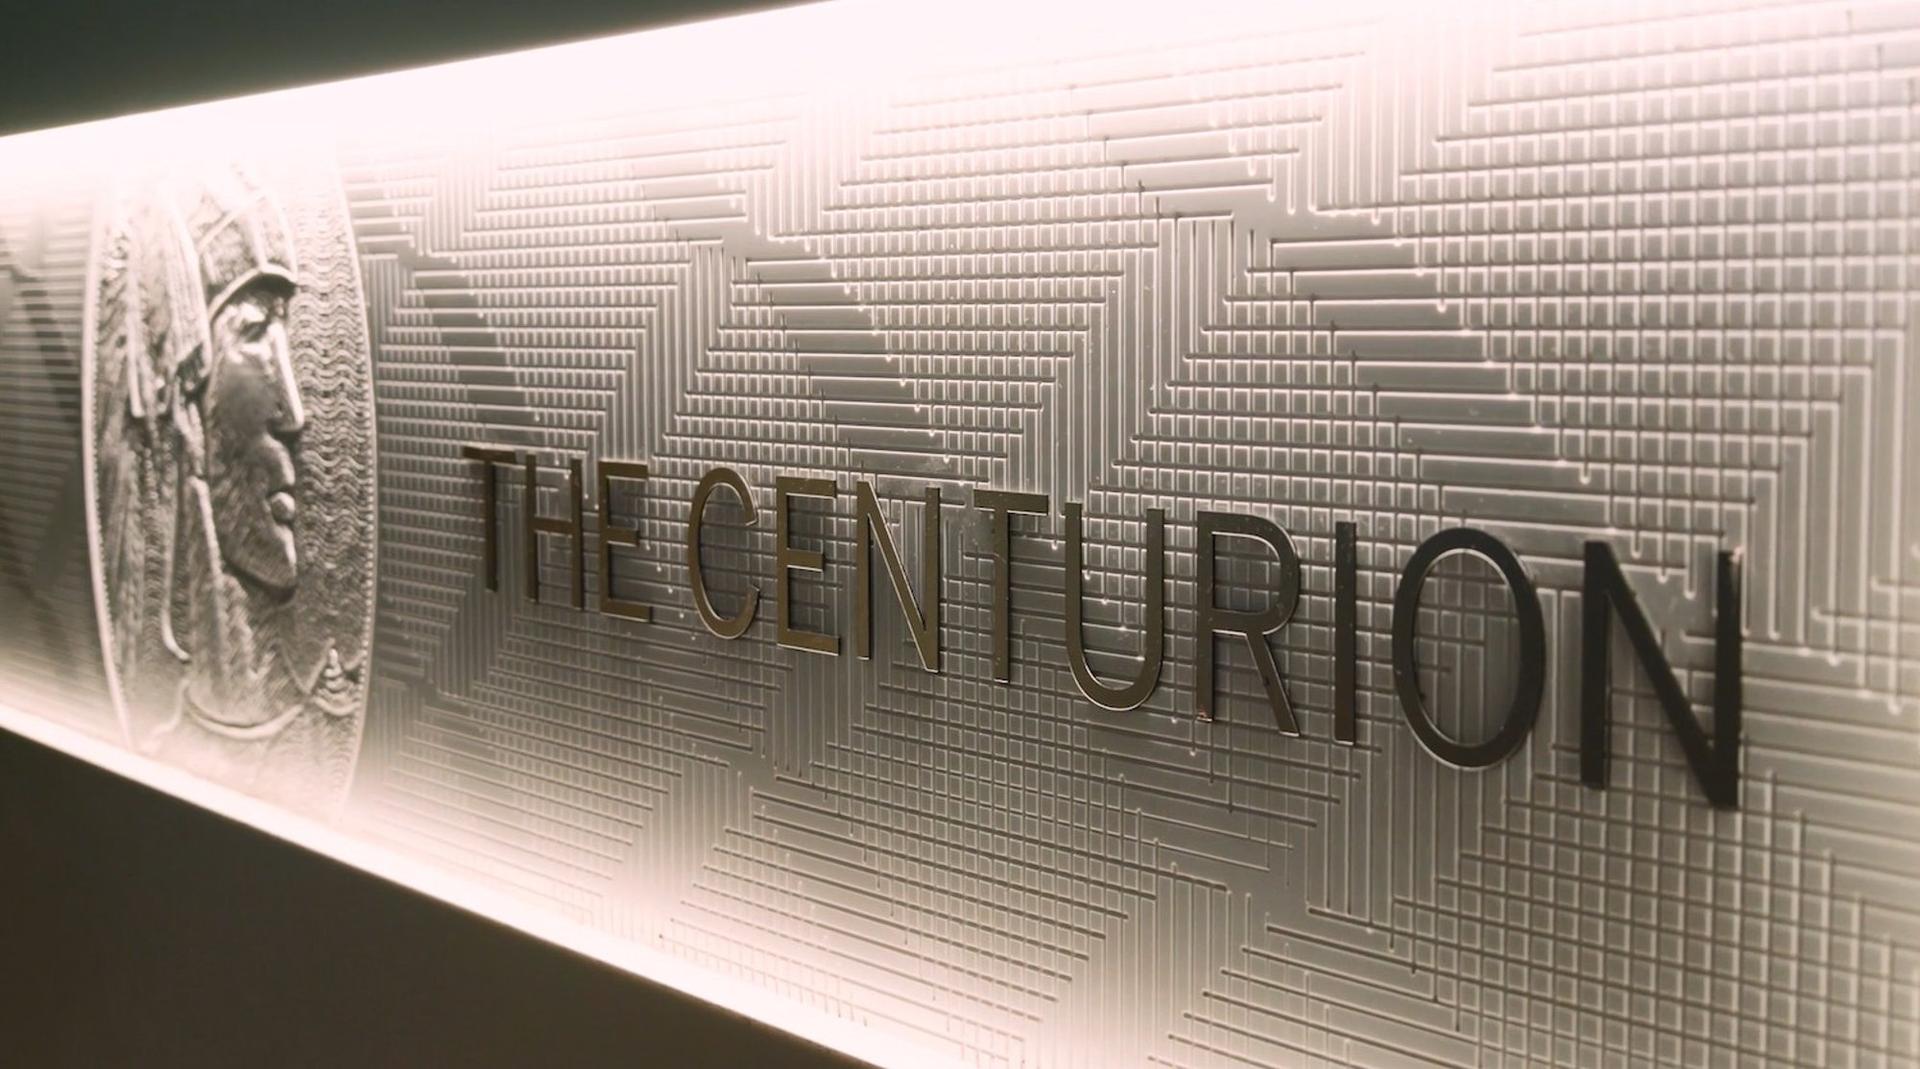 The Centurion Lounge image 5 of 6